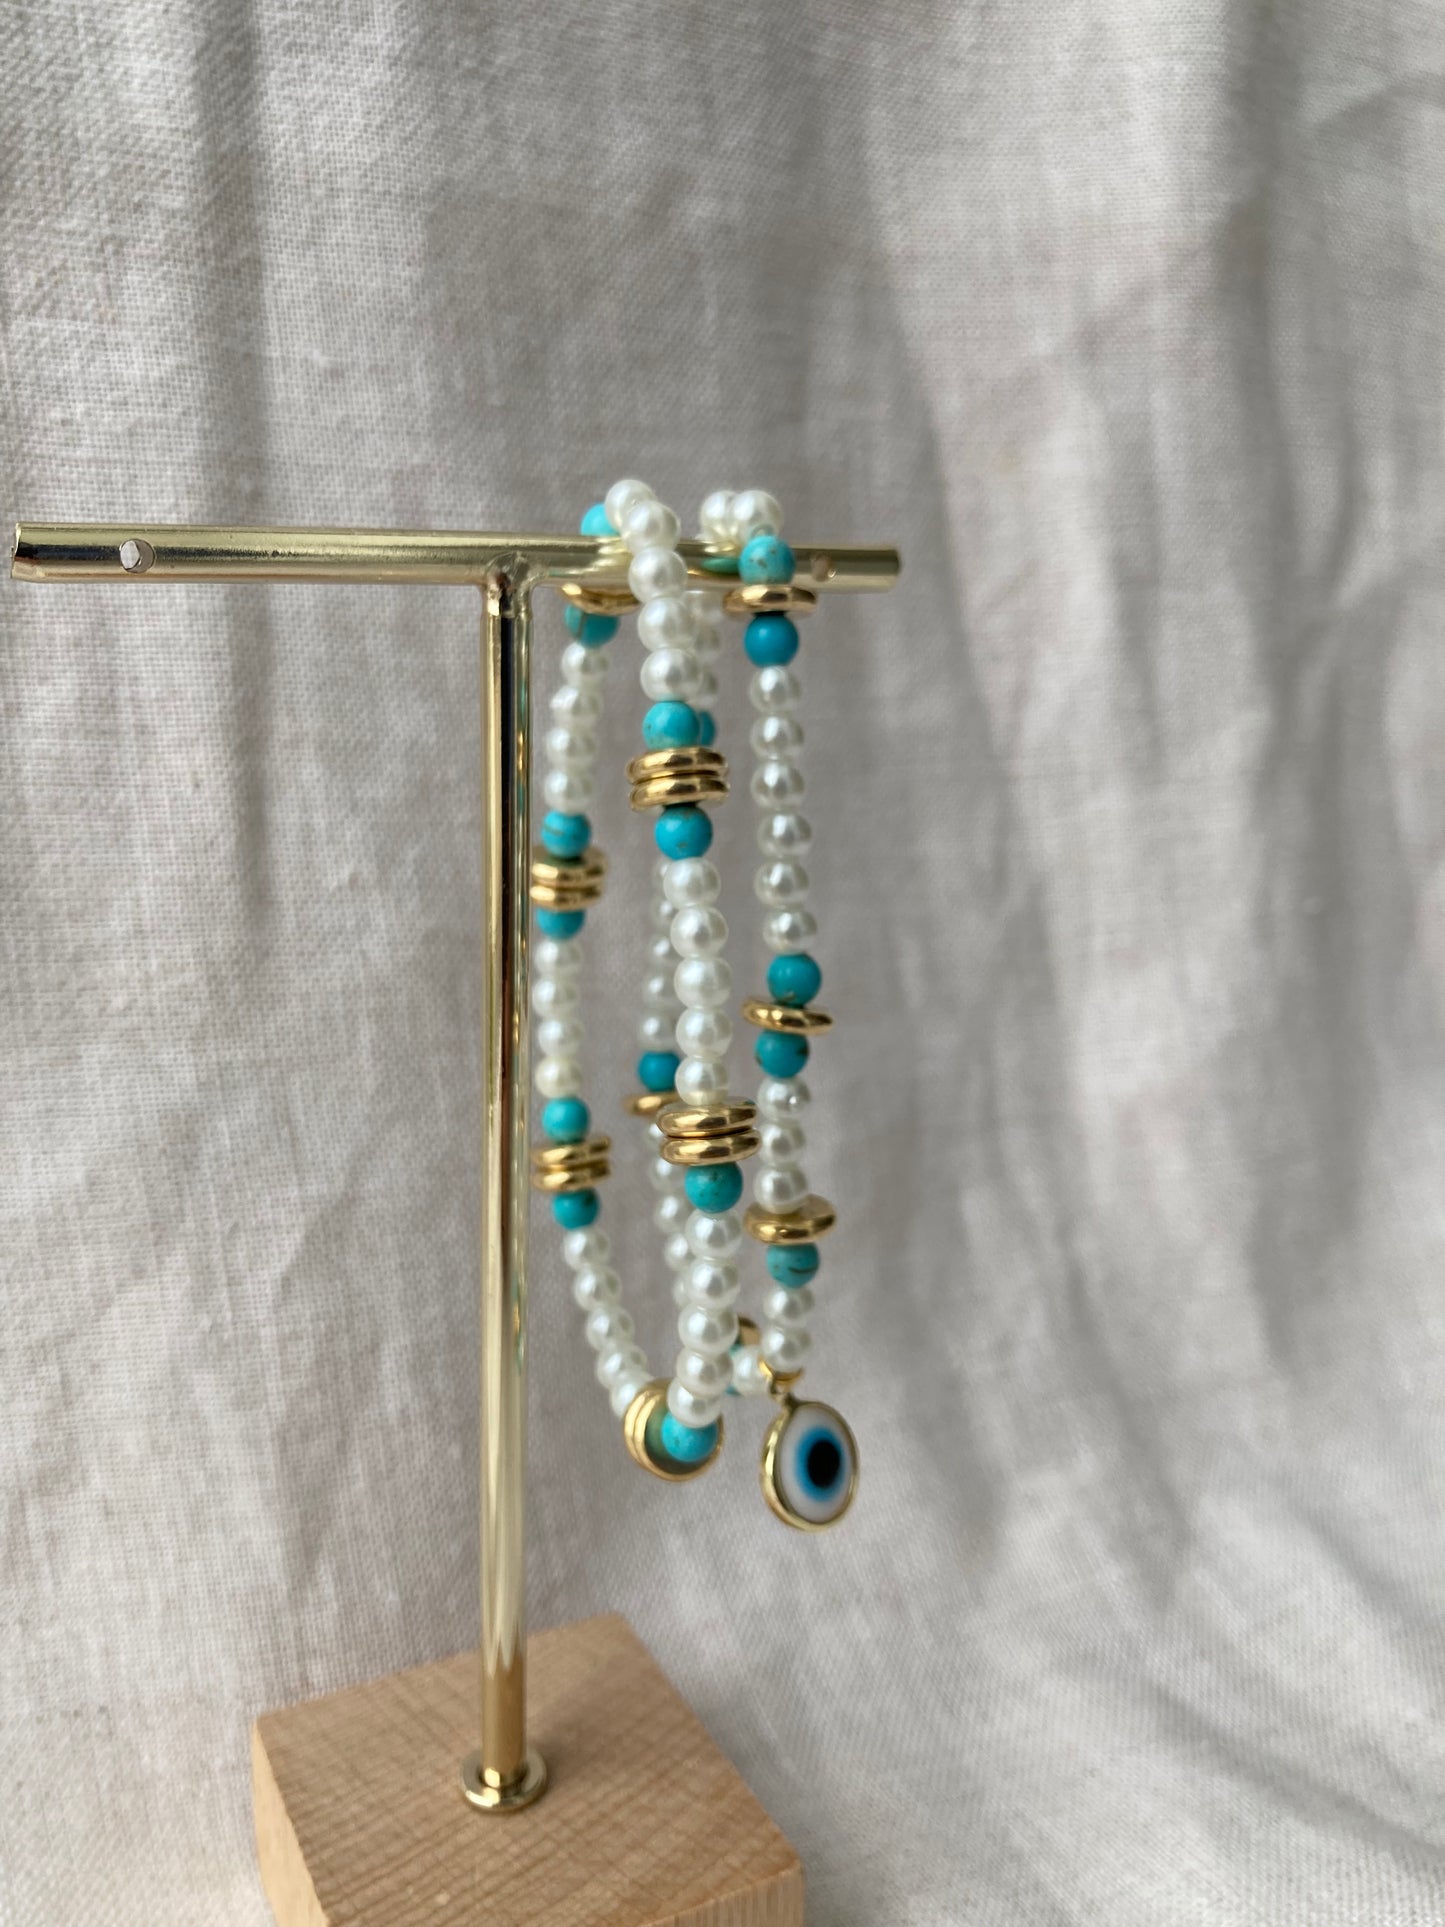 Pearl and Blue bead Handmade Bracelet